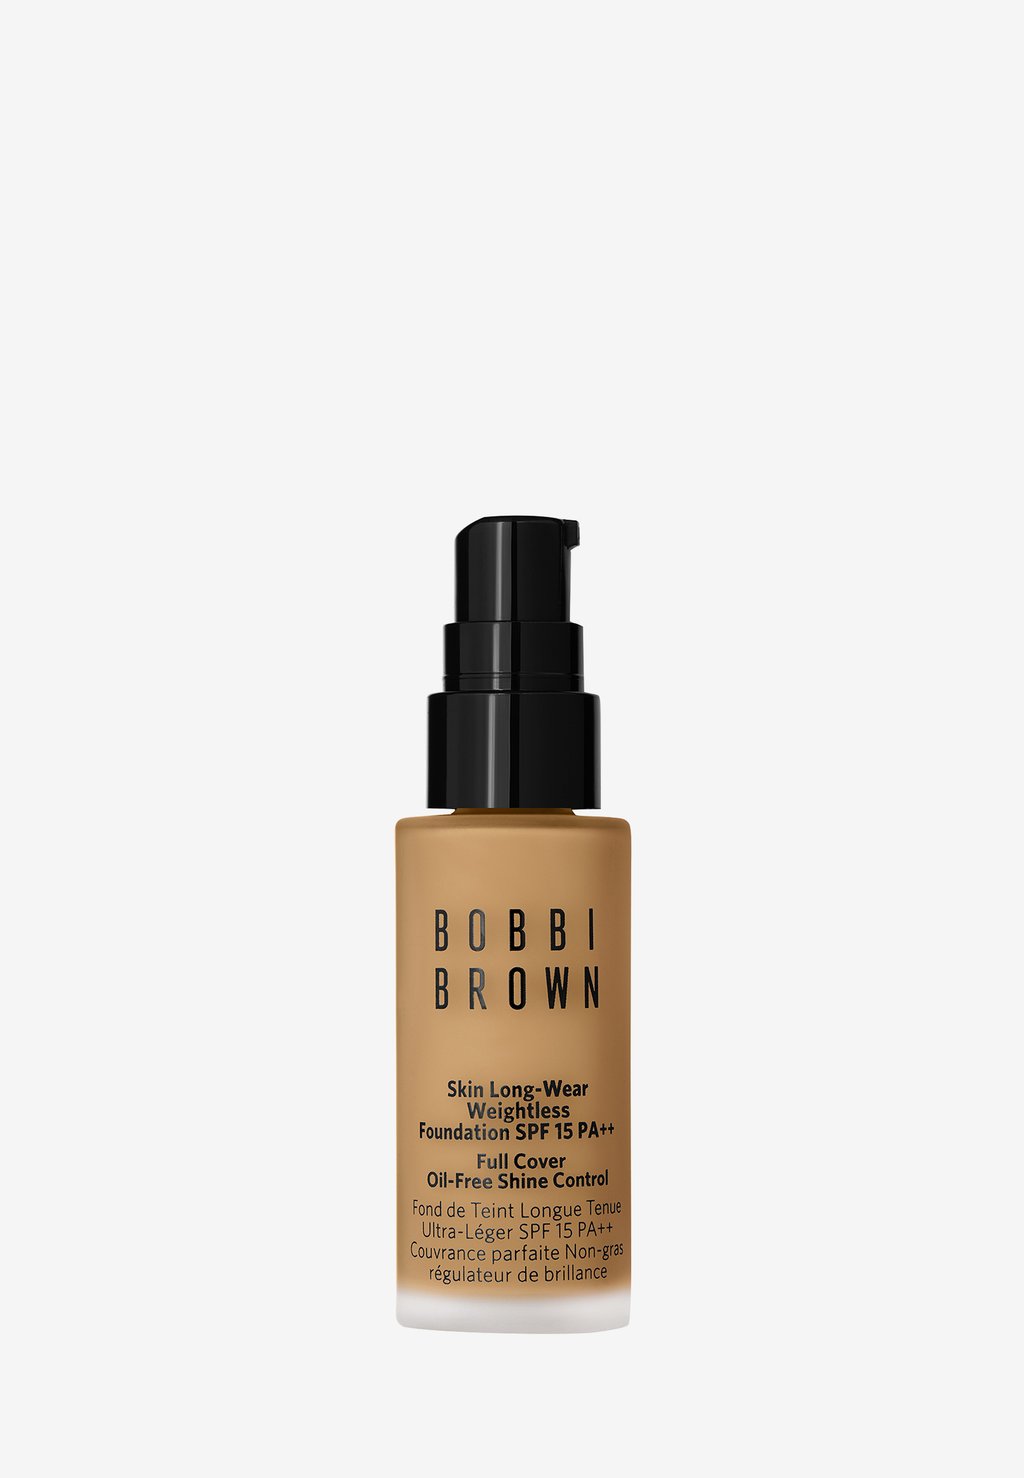 Тональный крем Mini Skin Long-Wear Weightless Foundation Bobbi Brown, цвет natural